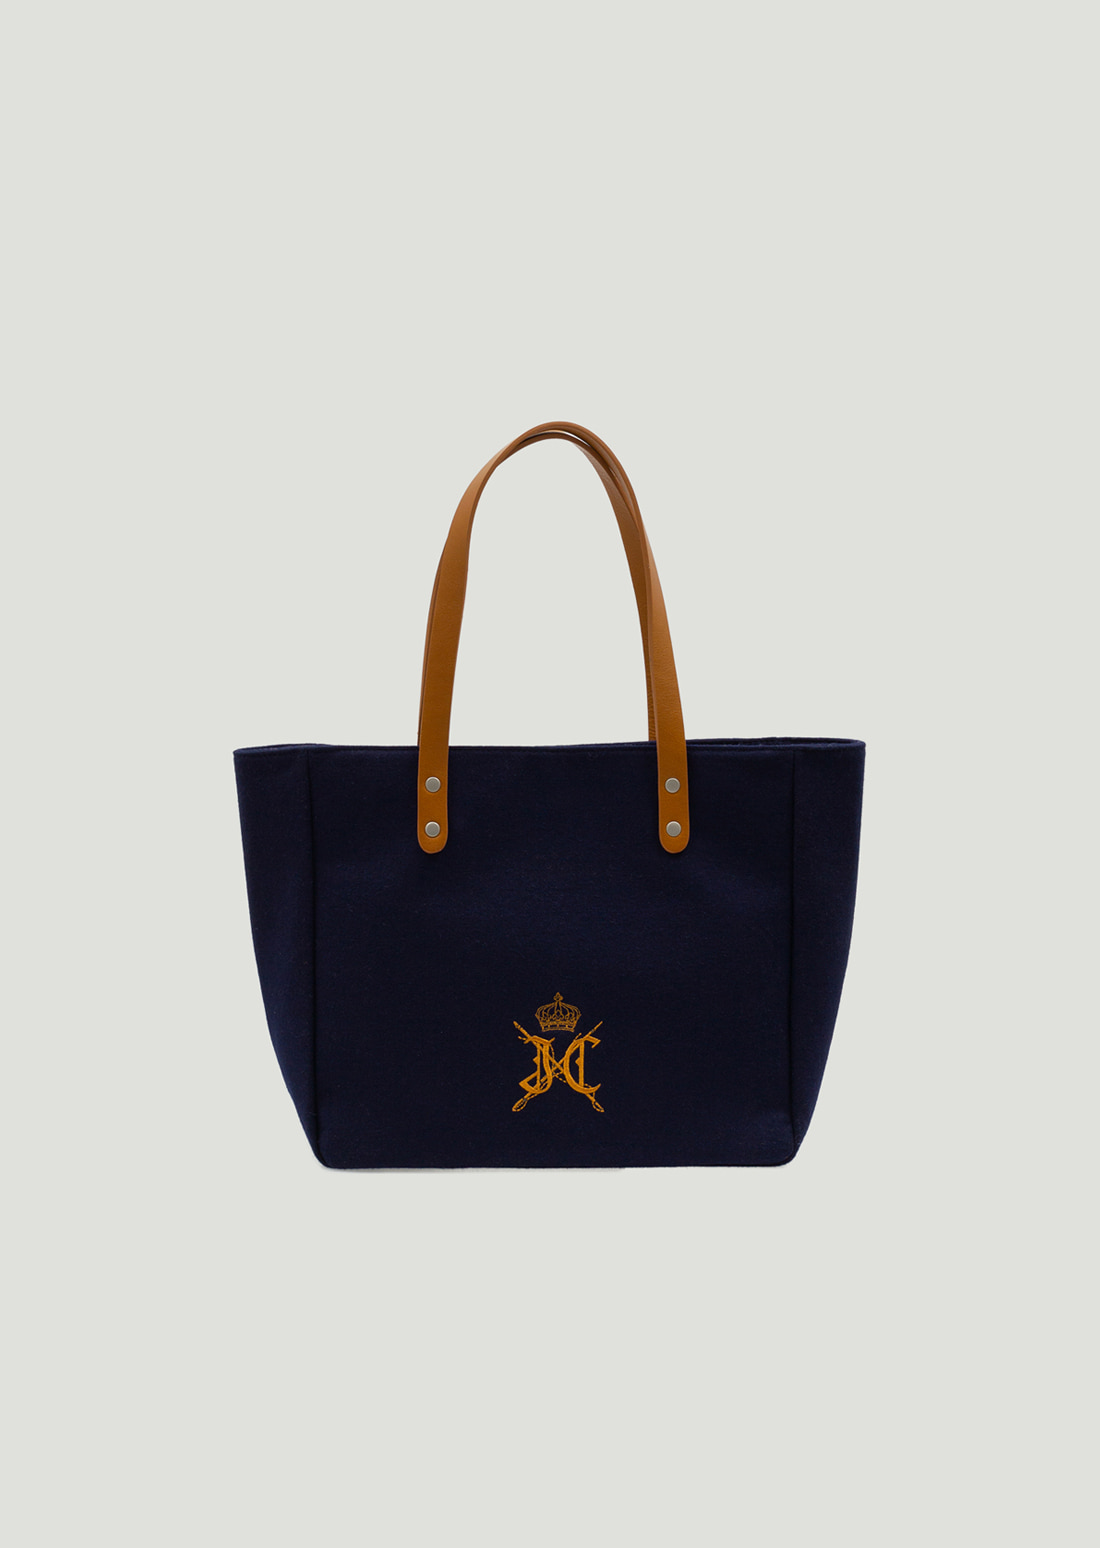 JC Emblem Wool Tote Bag (Navy)